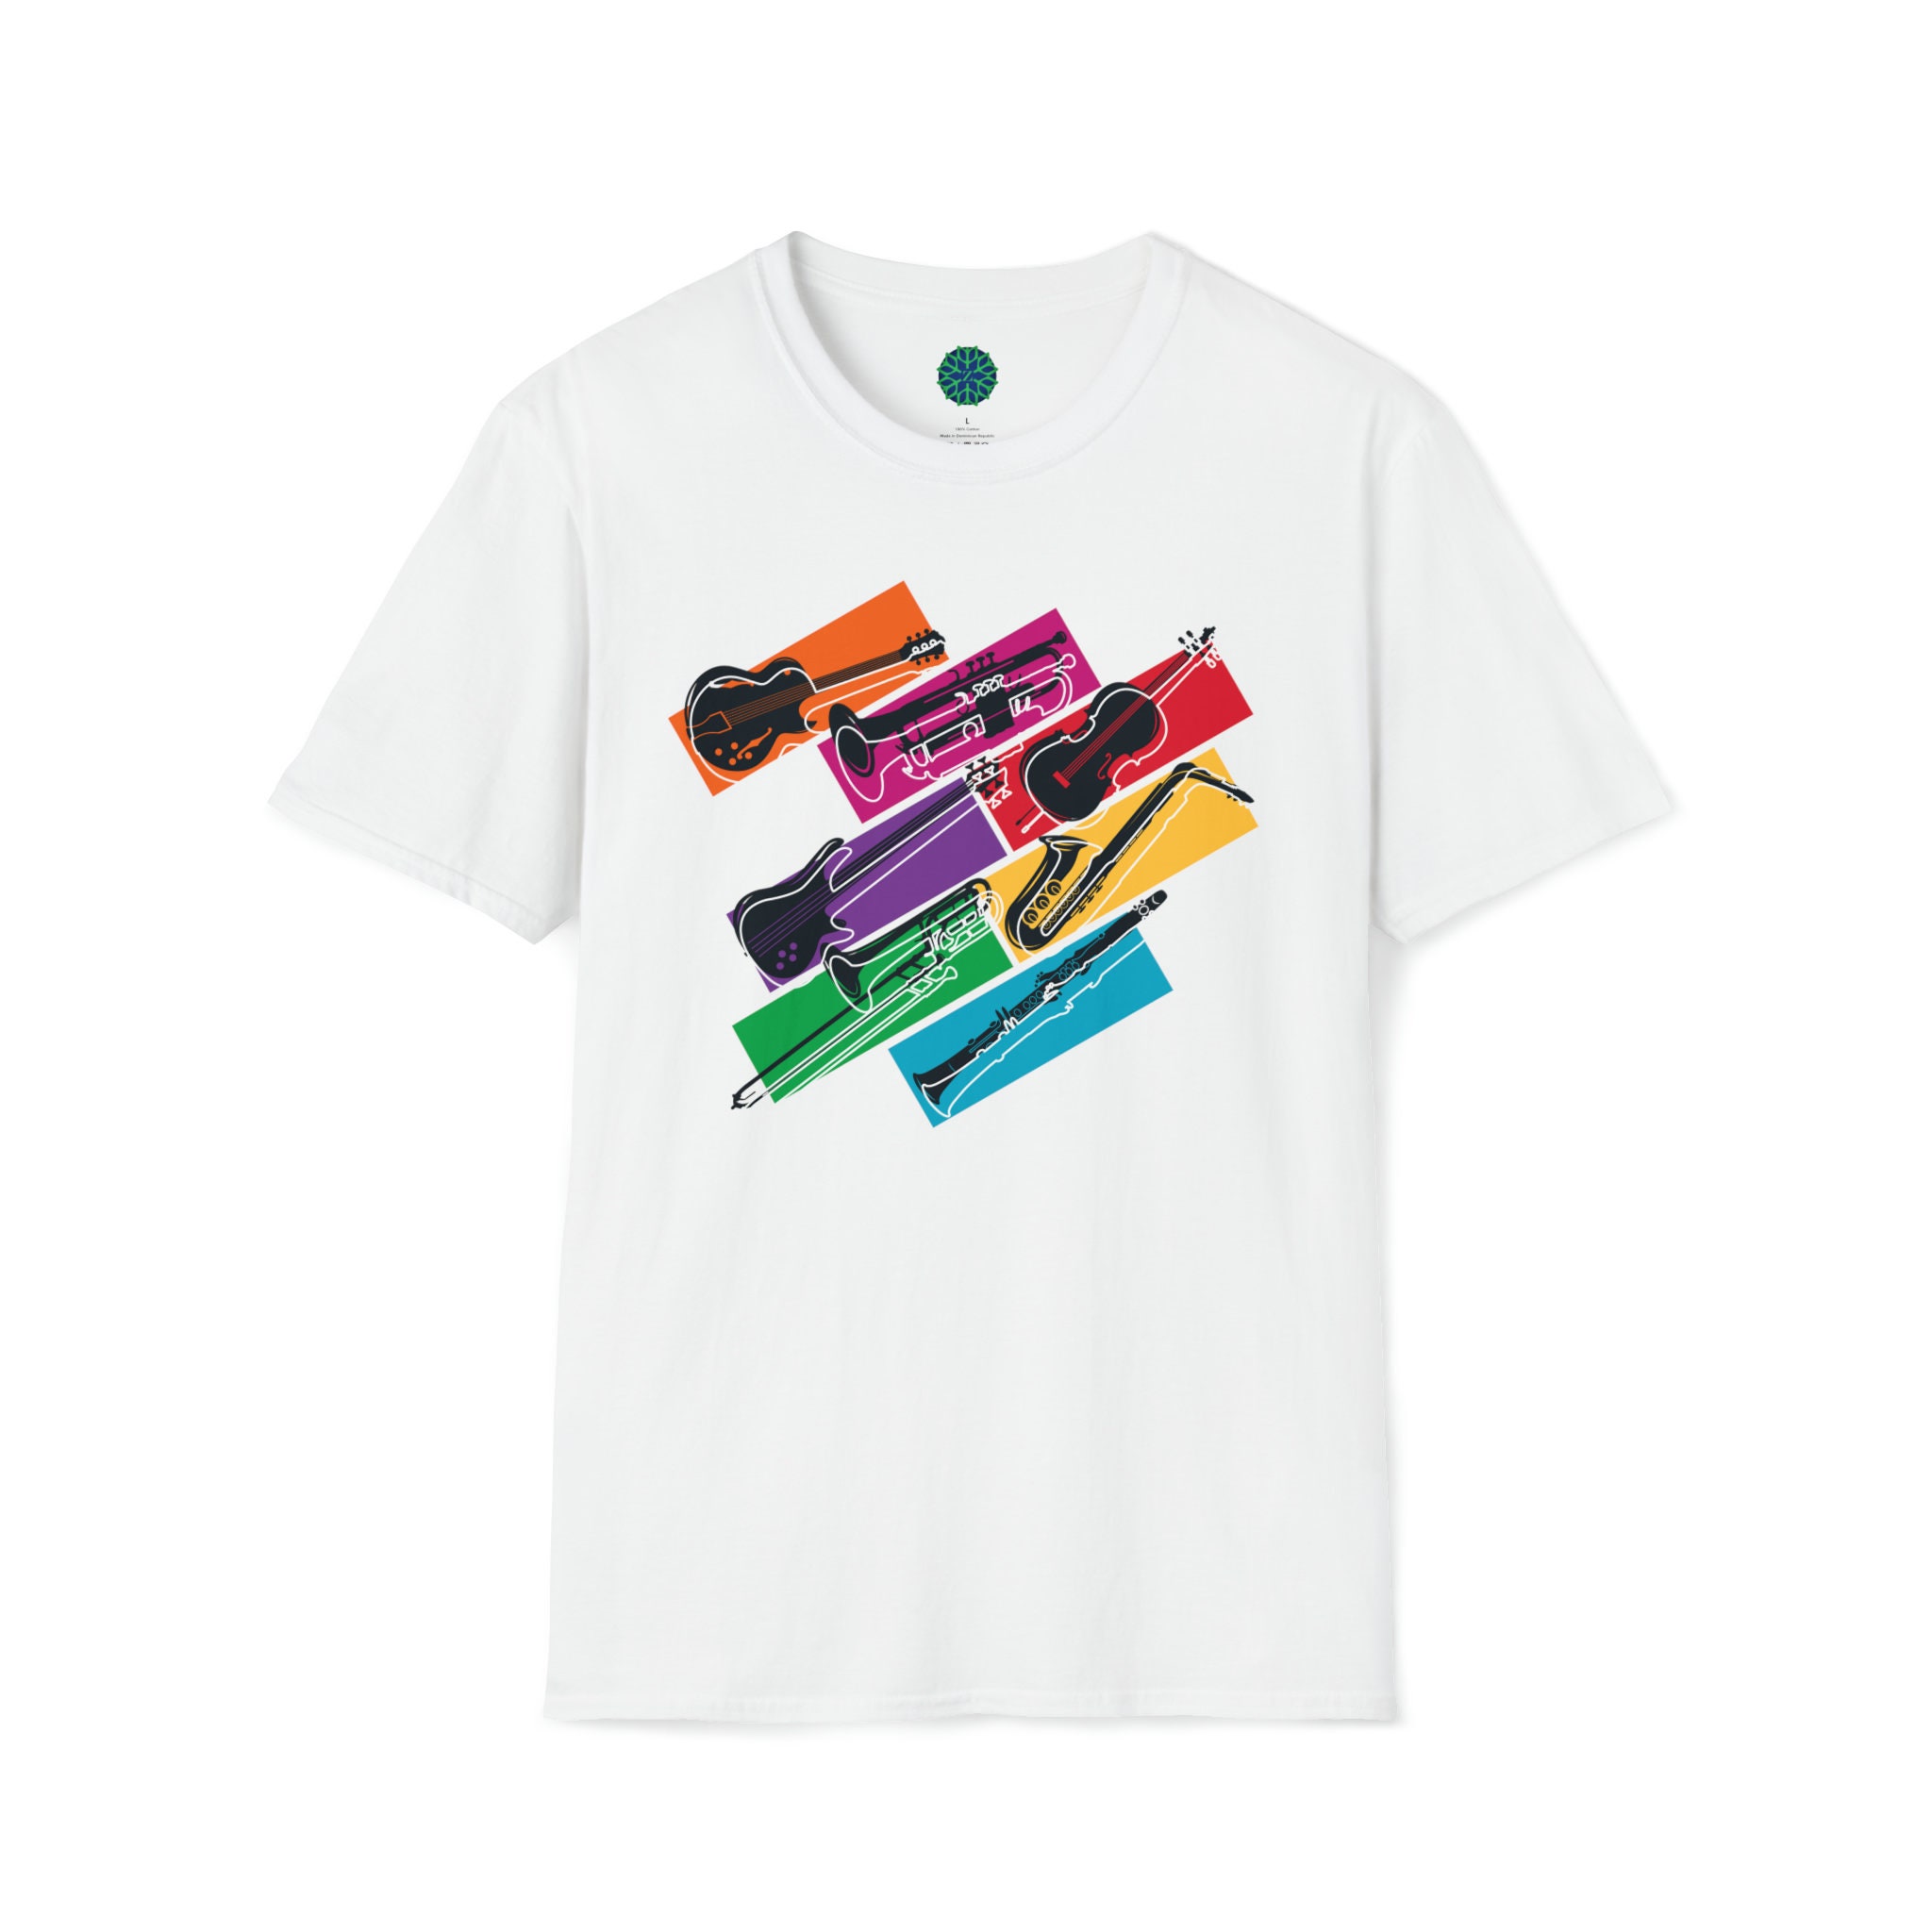 Wine & jazz festival T shirt Design Drink Tee Shirts for Adult Men's &  Women's - TshirtCare